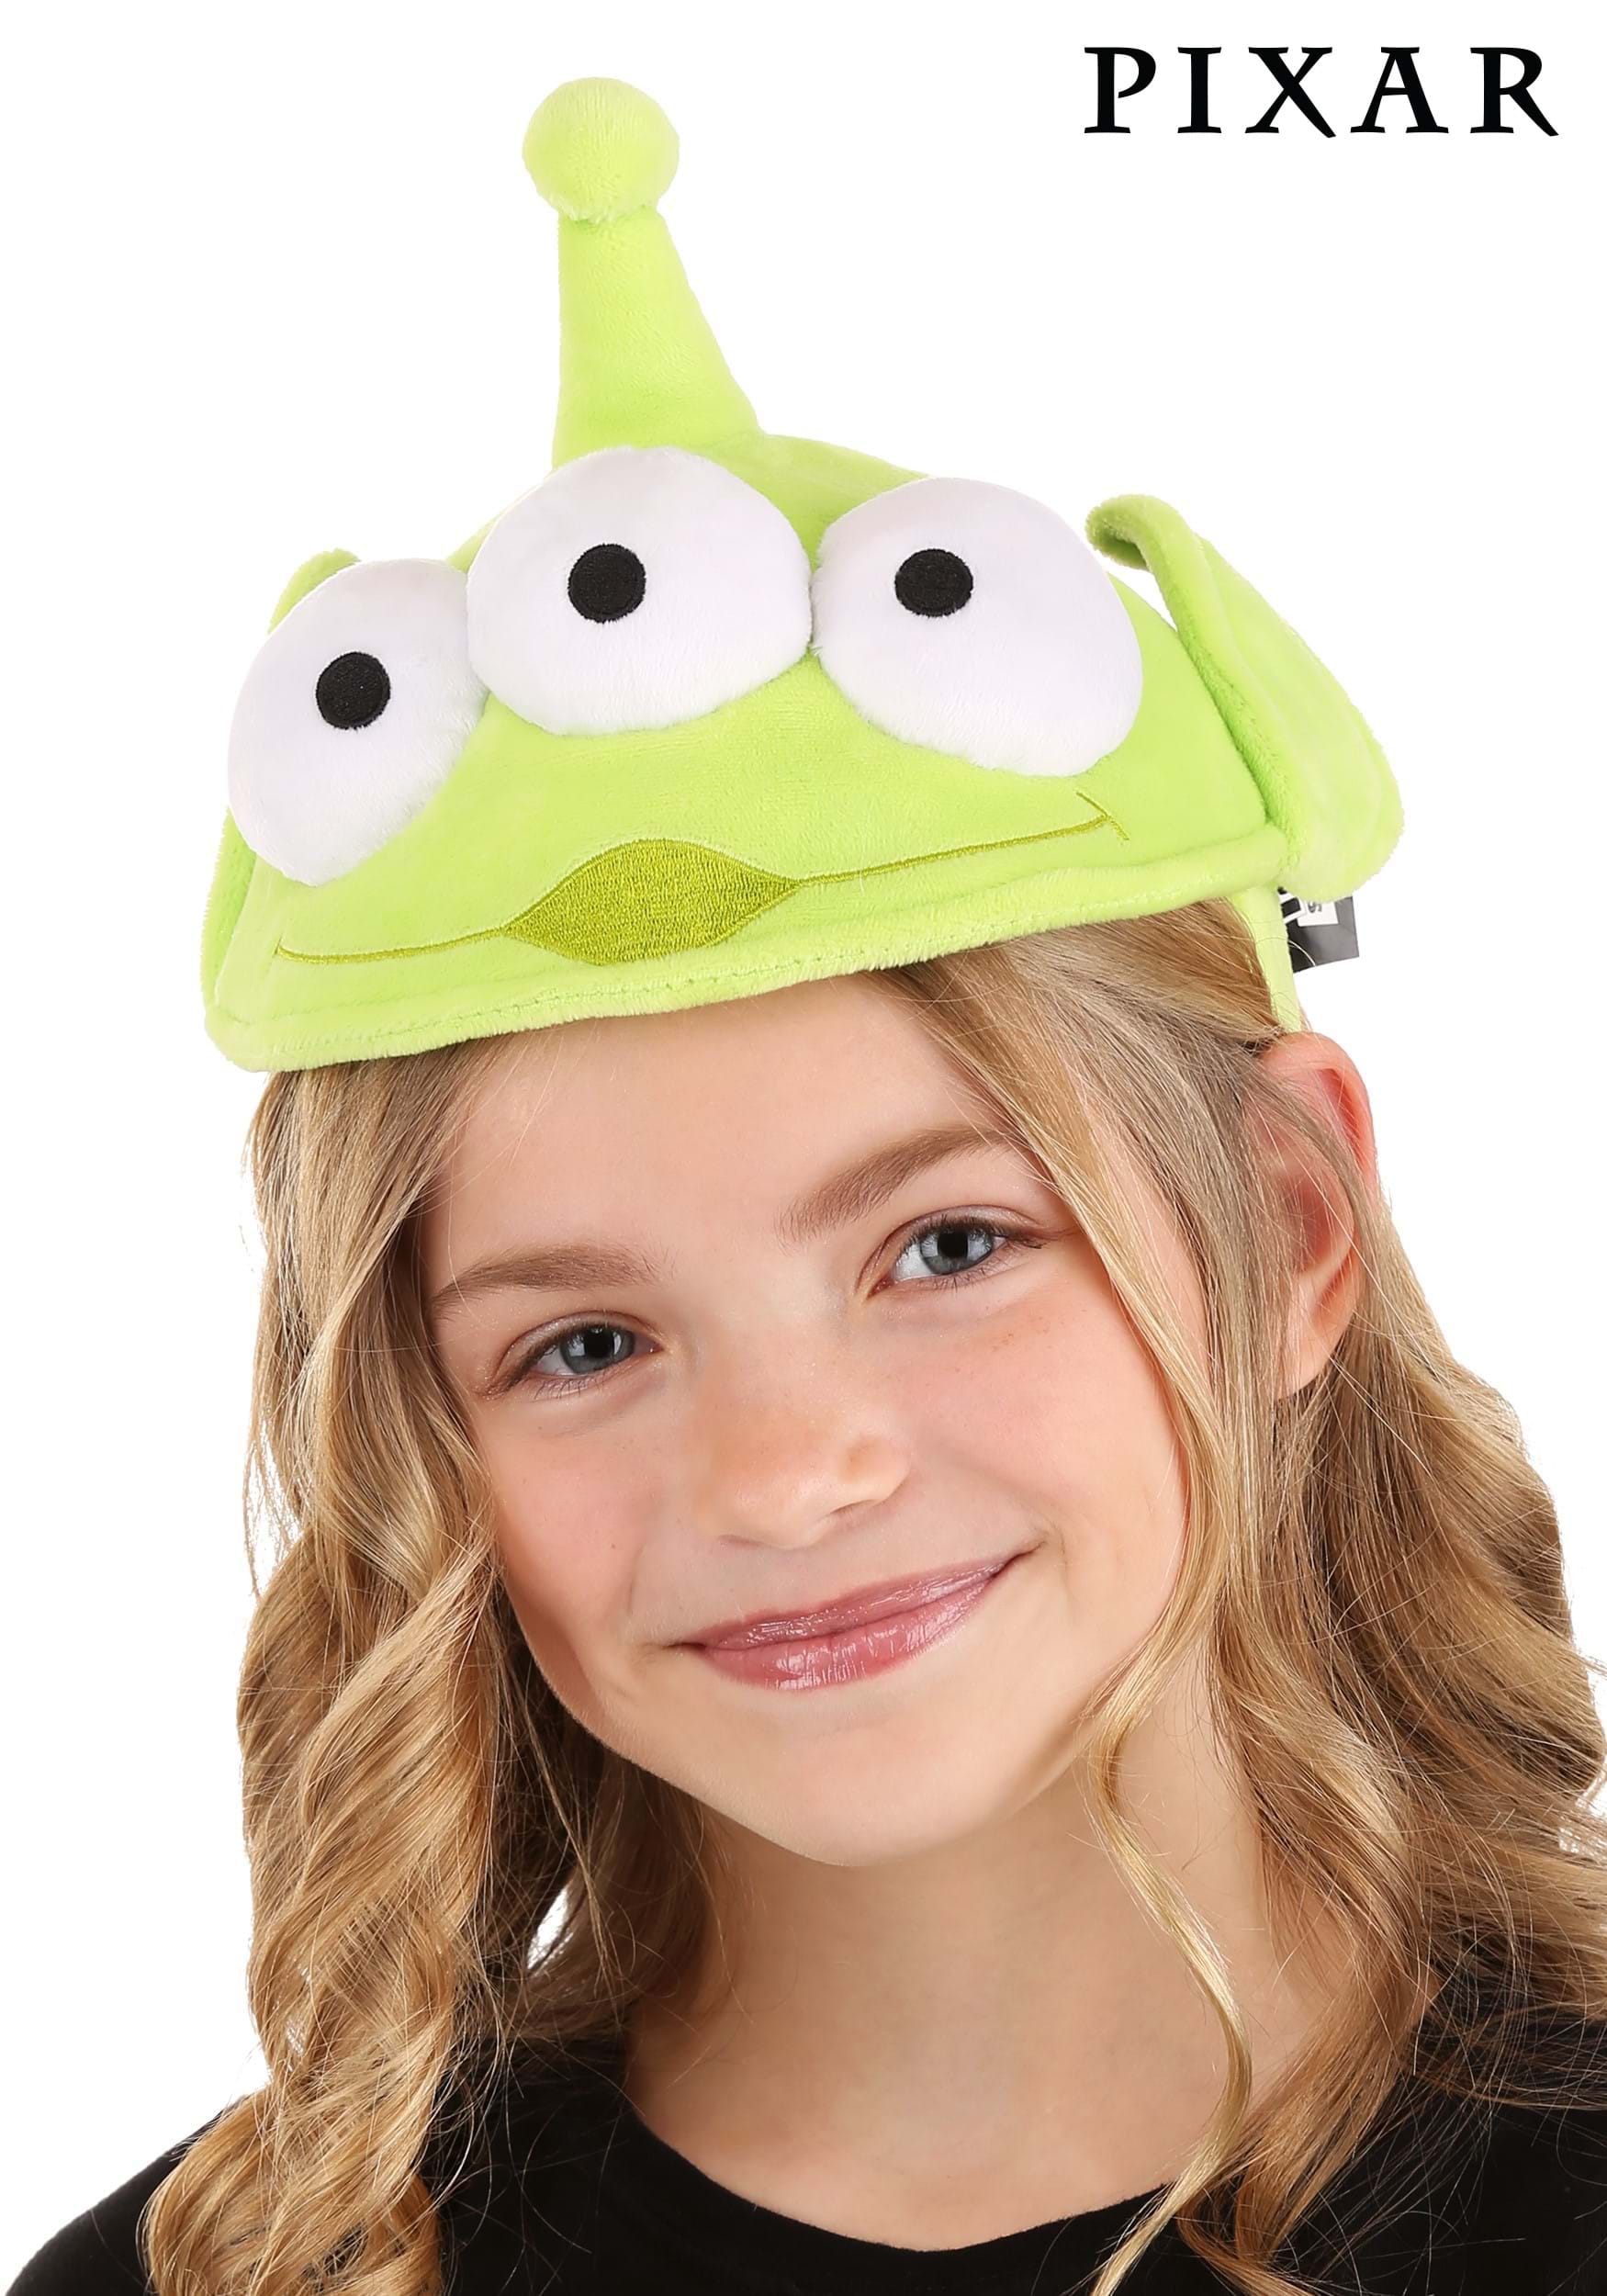 DISNEY RESORT Toy Story Alien Plush Headband cosplay Gift Costume Ears